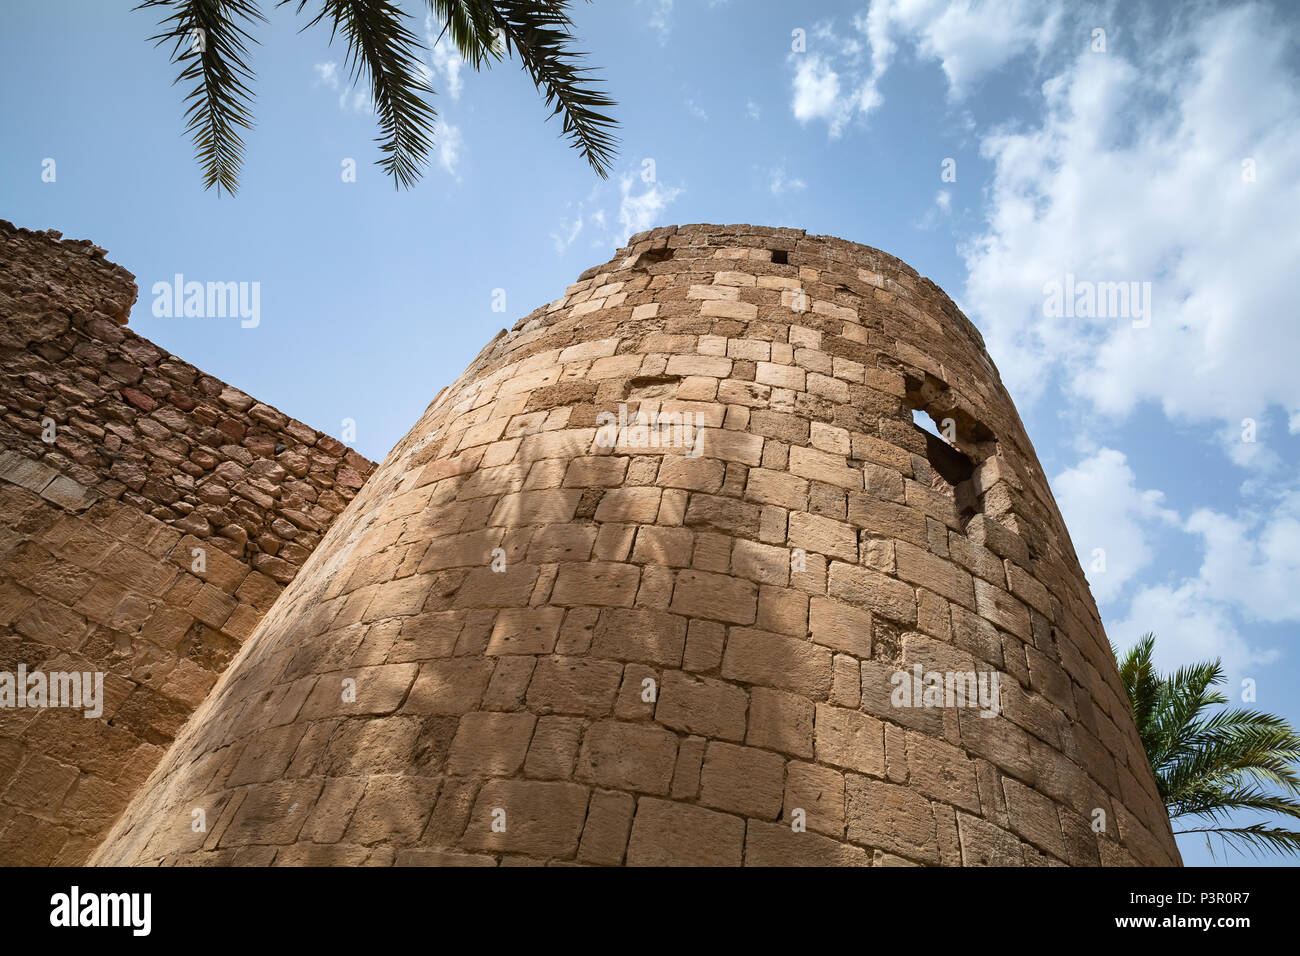 Tower of old Aqaba Fortress, Mamluk Castle or Aqaba Fort located in Aqaba city, Jordan Stock Photo